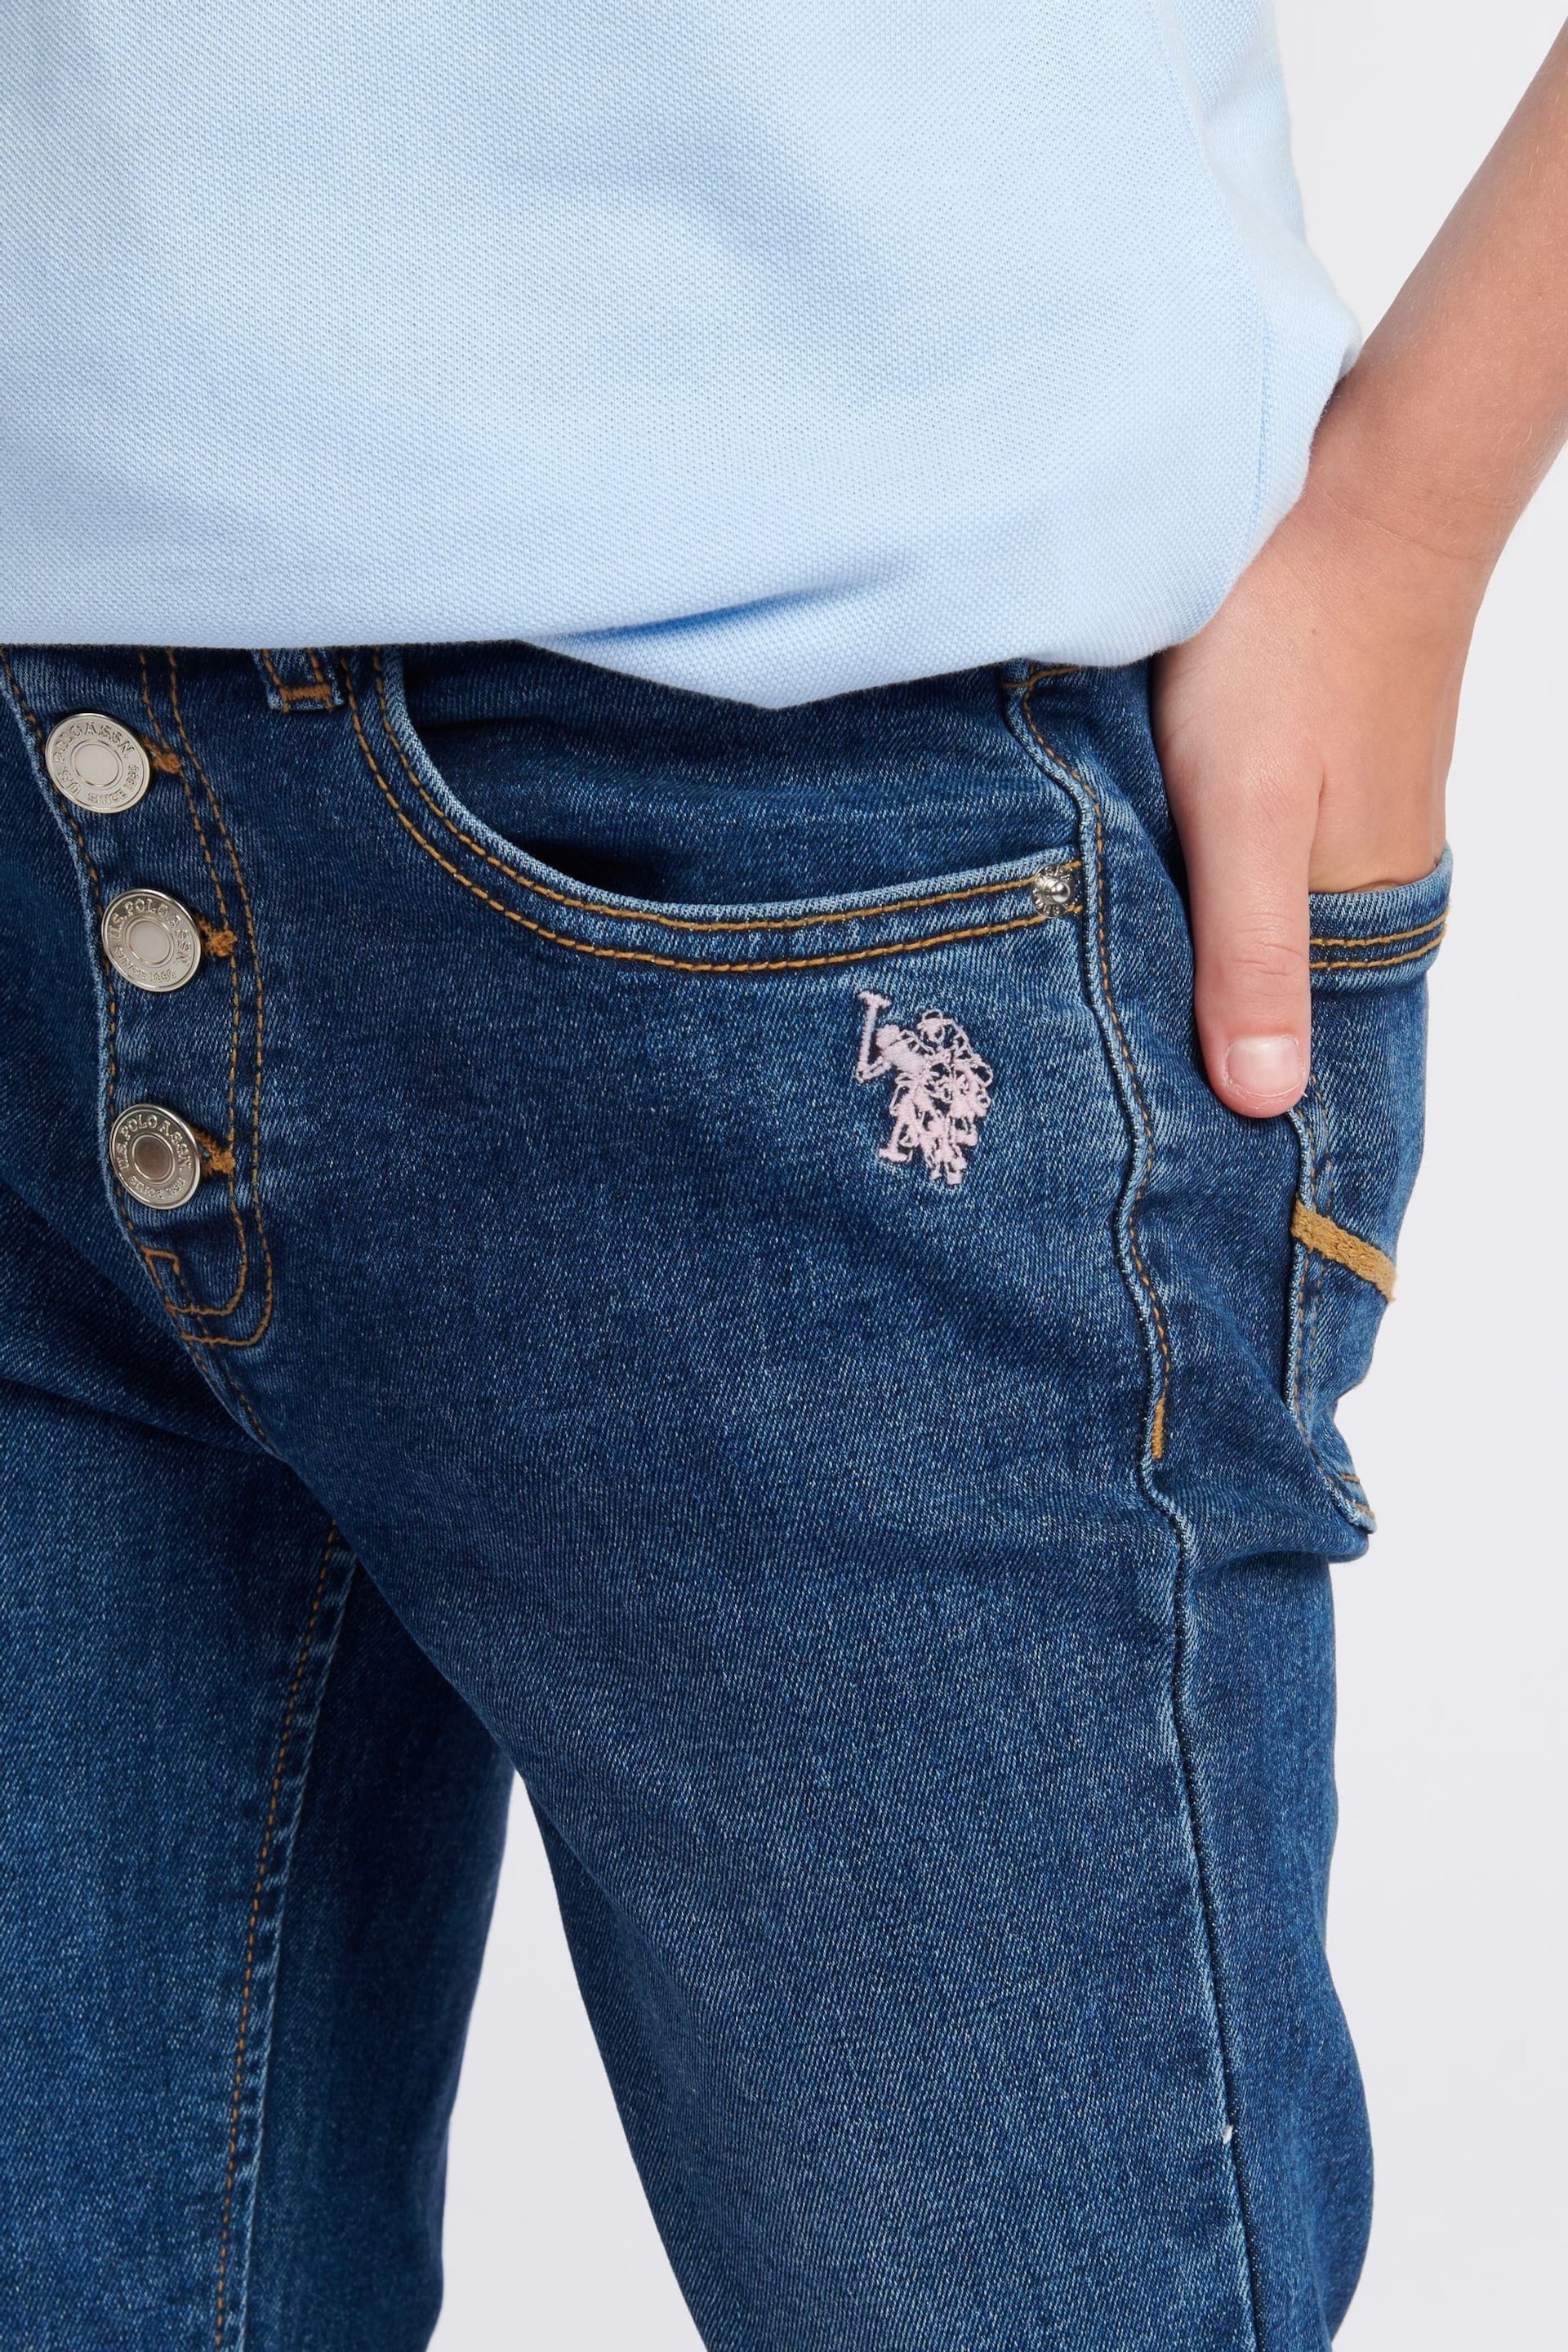 U.S. Polo Assn. Girls Coloured Bootleg Denim Jeans - Image 3 of 8